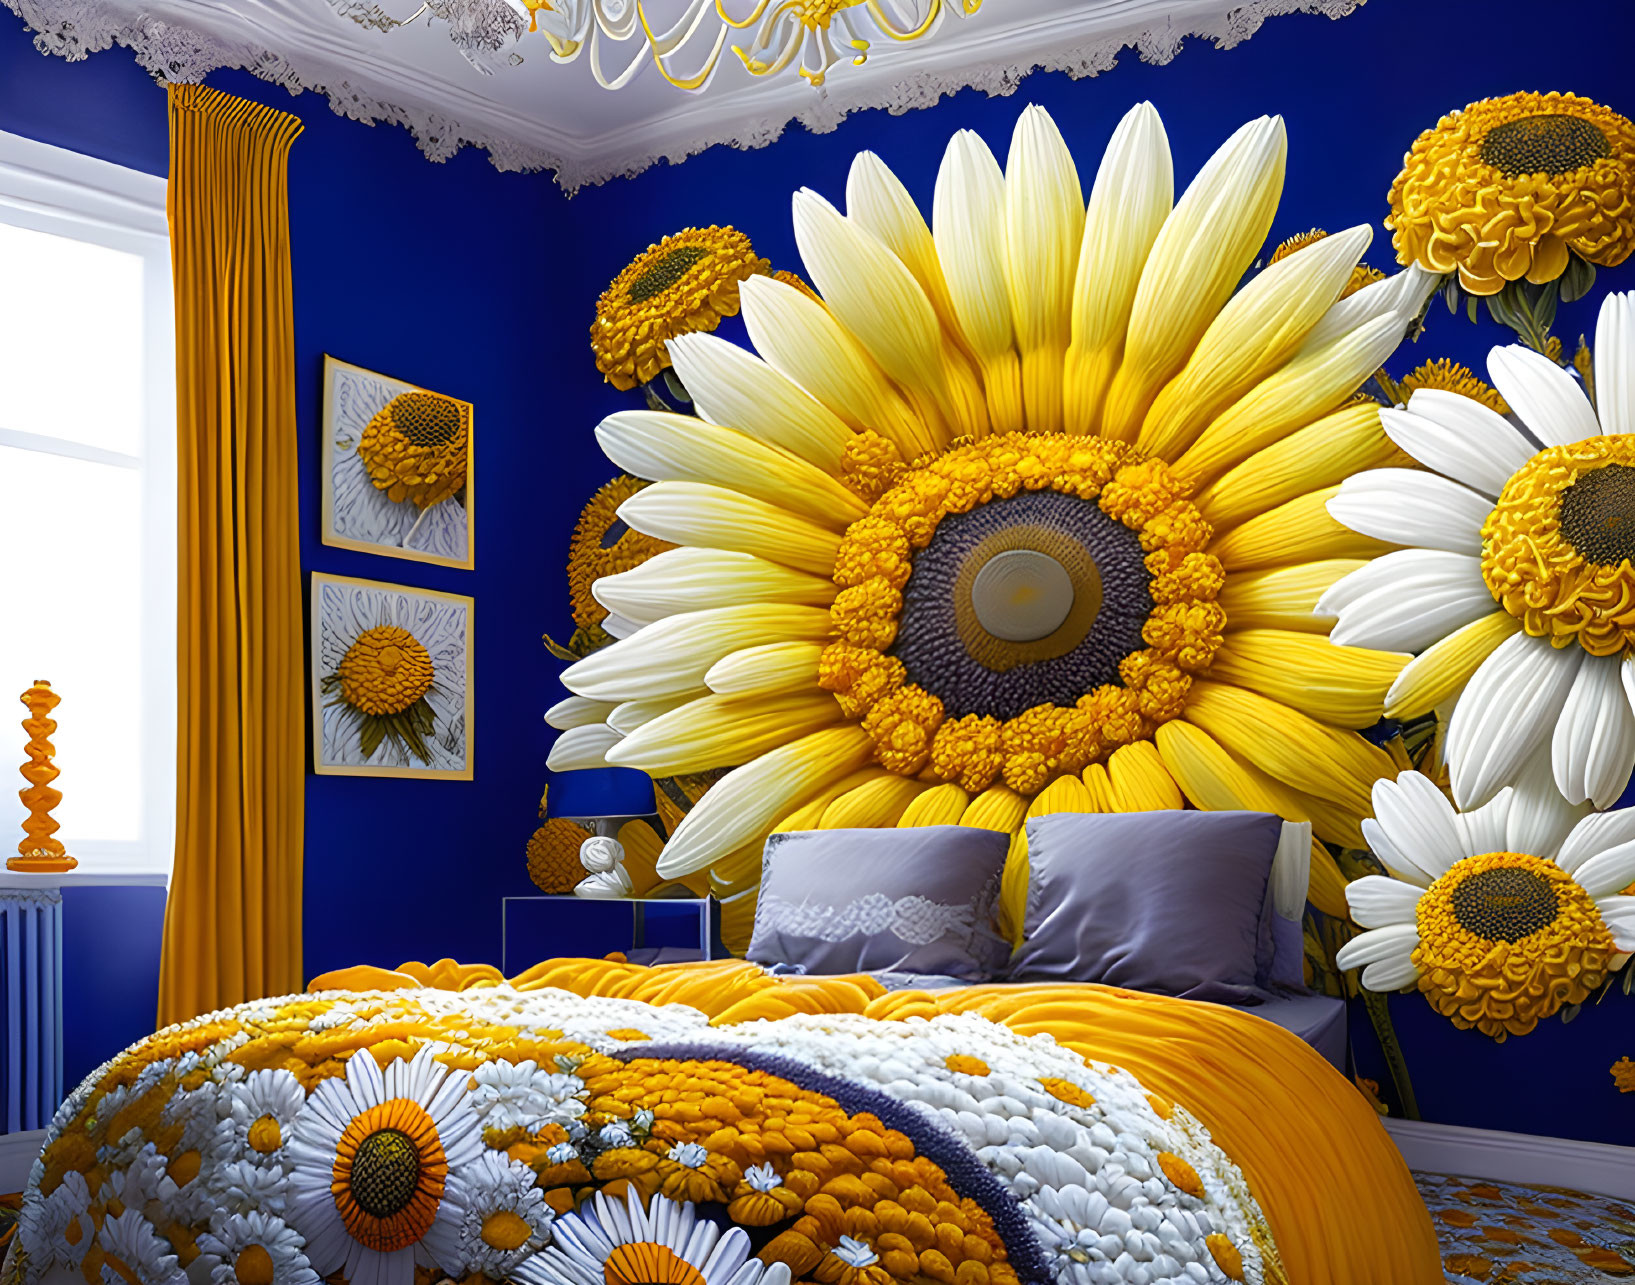 Sun Flower Bed